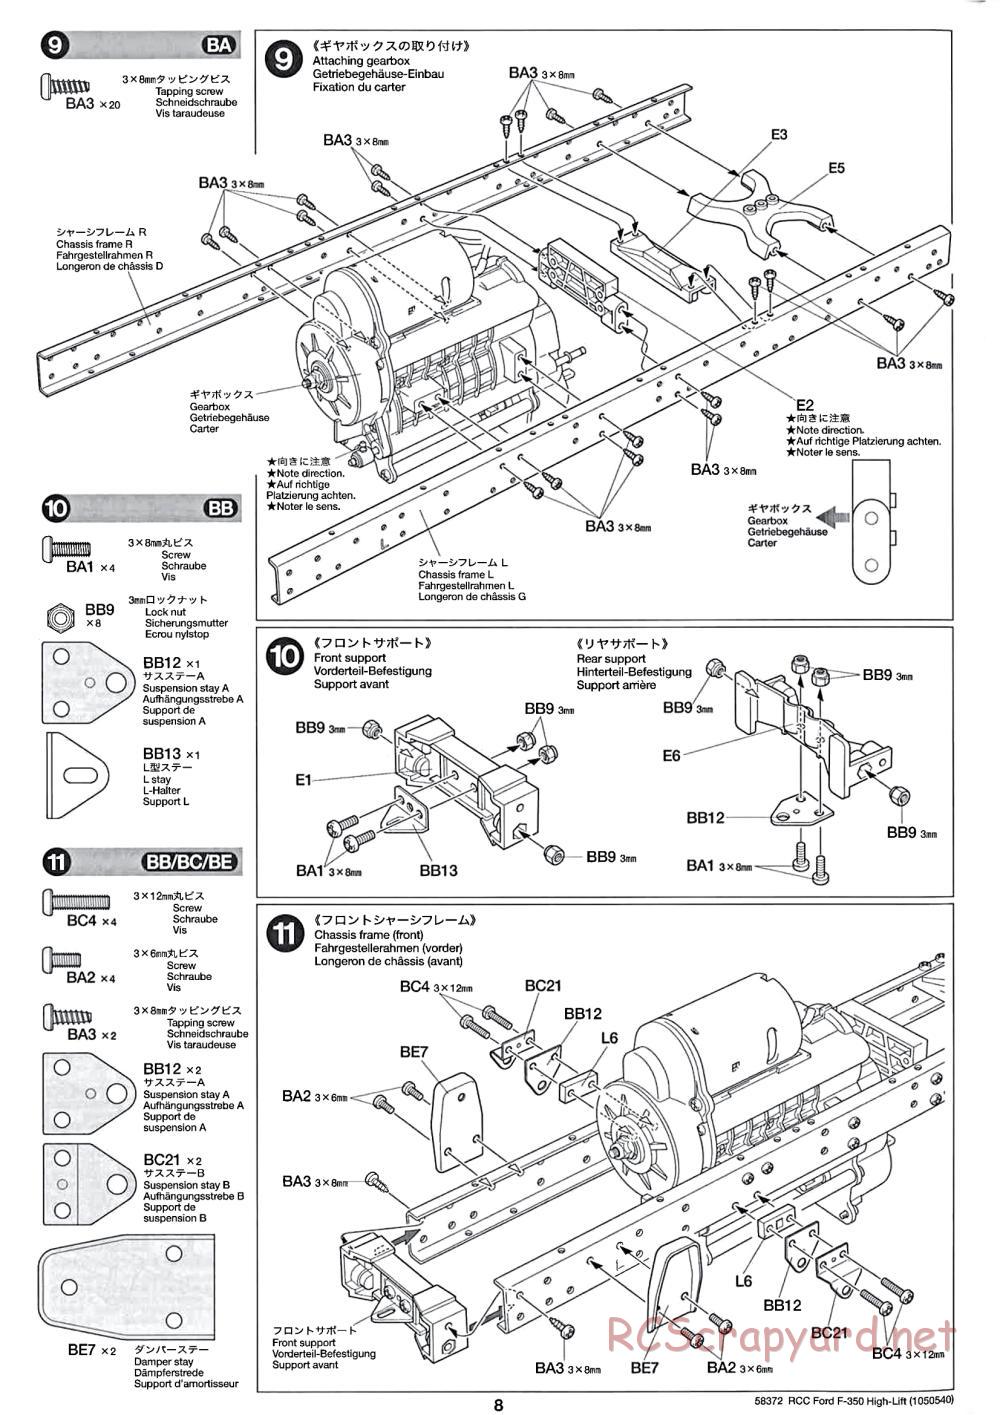 Tamiya - Ford F350 High-Lift Chassis - Manual - Page 8